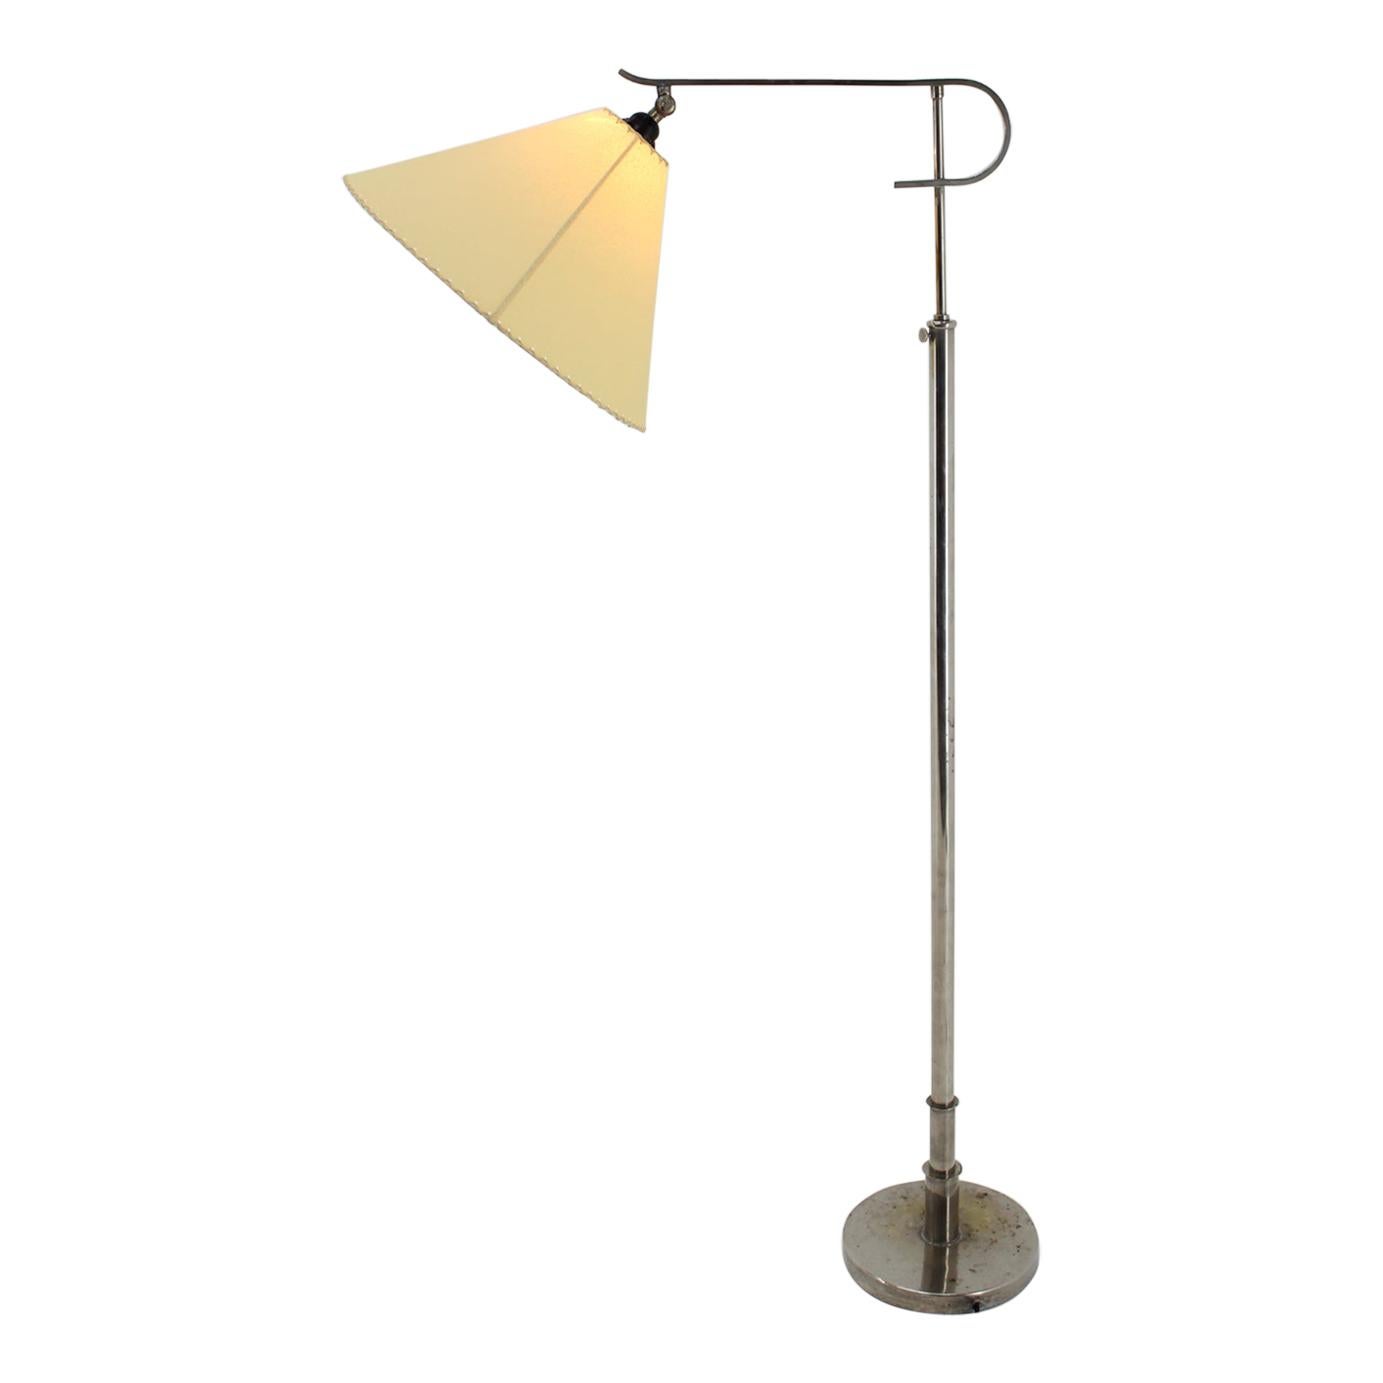 Bauhaus Chrome Adjustable Floor Lamp, 1930s / Functionalism